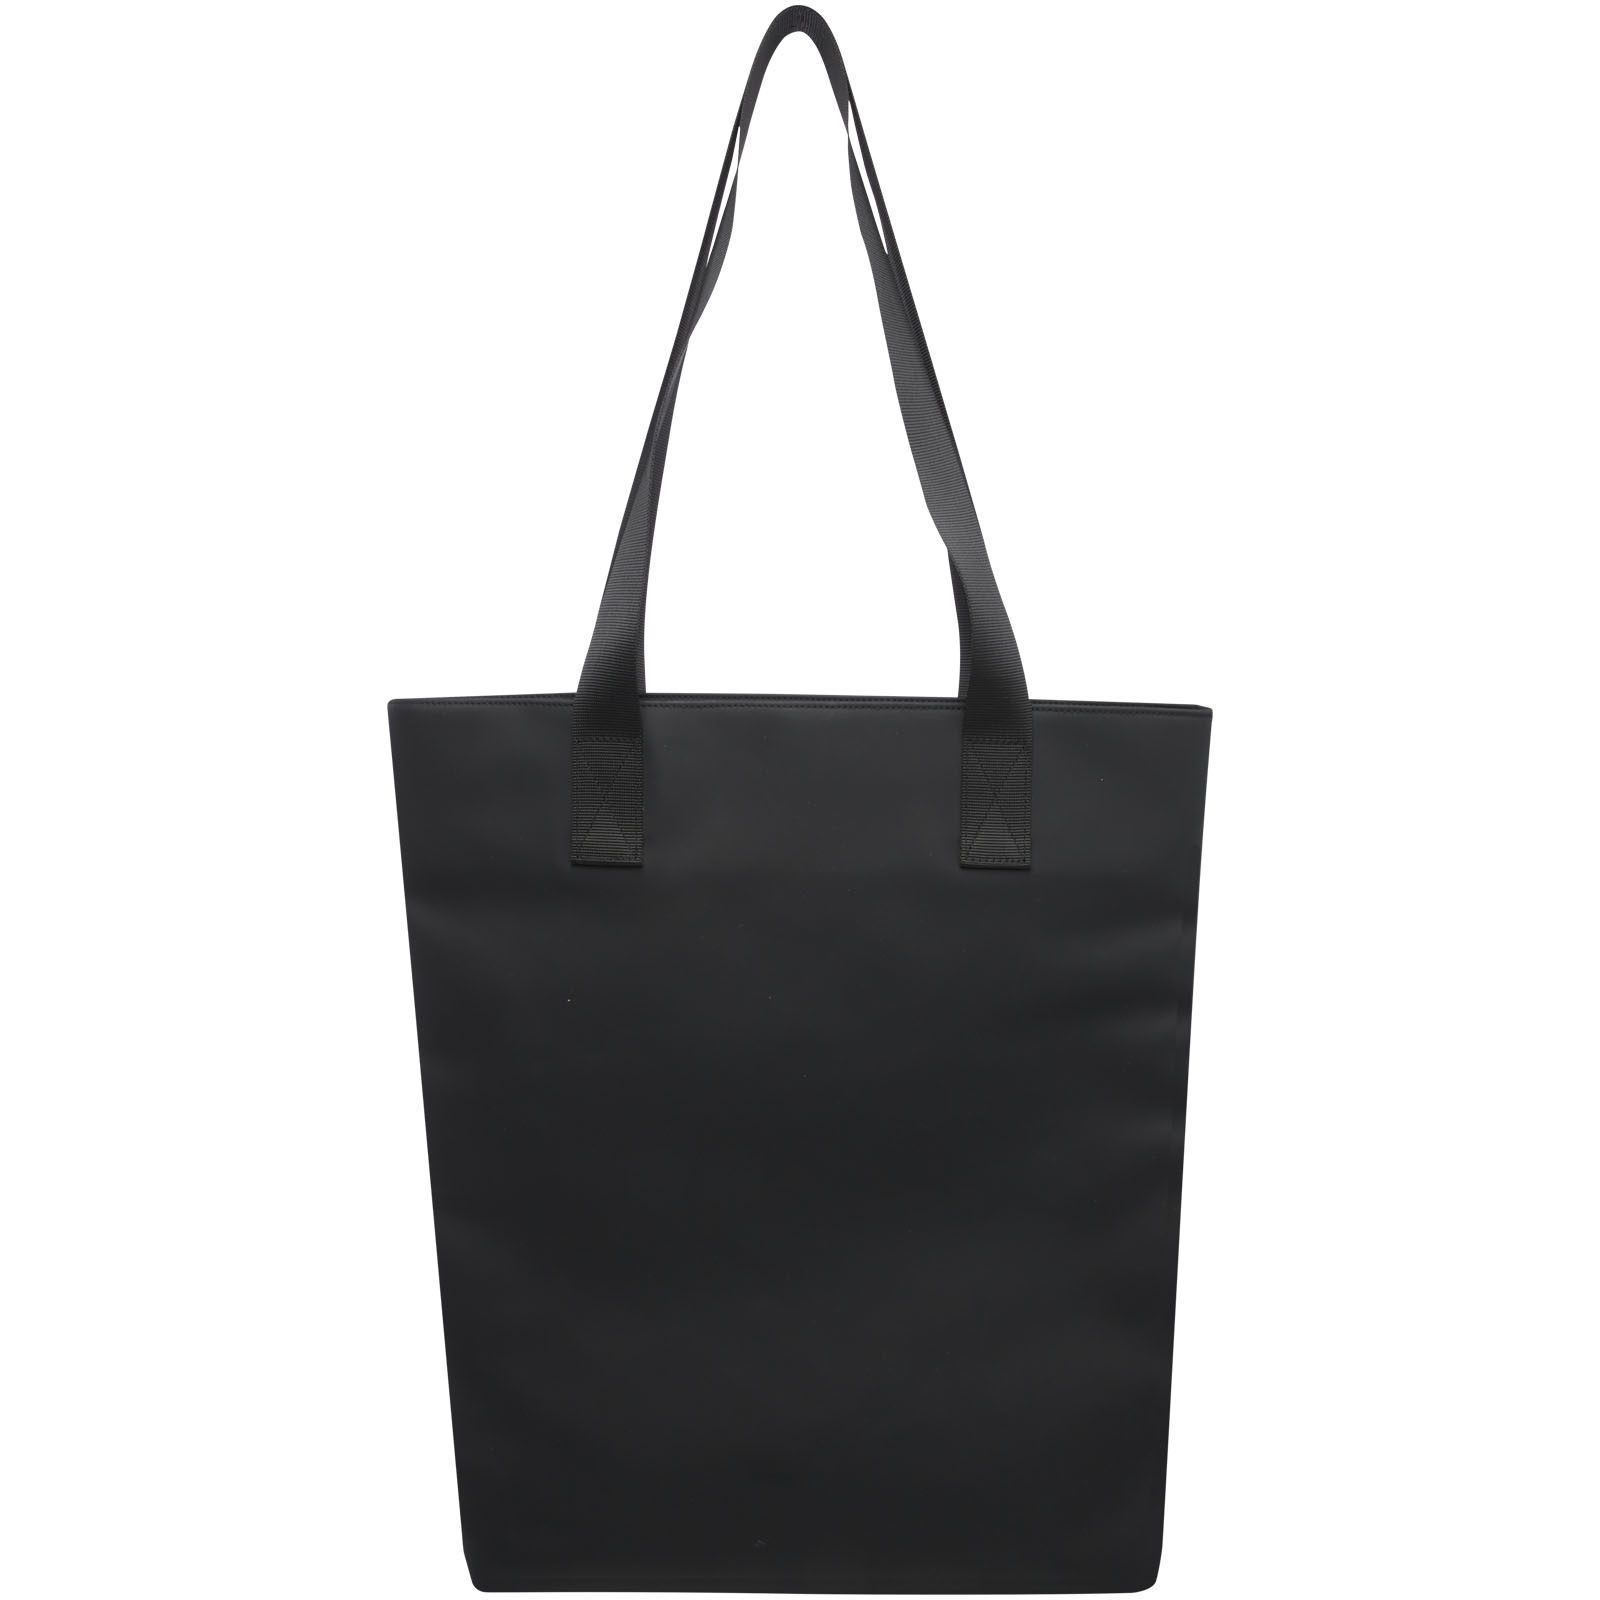 Advertising Shopping & Tote Bags - Turner tote bag - 2